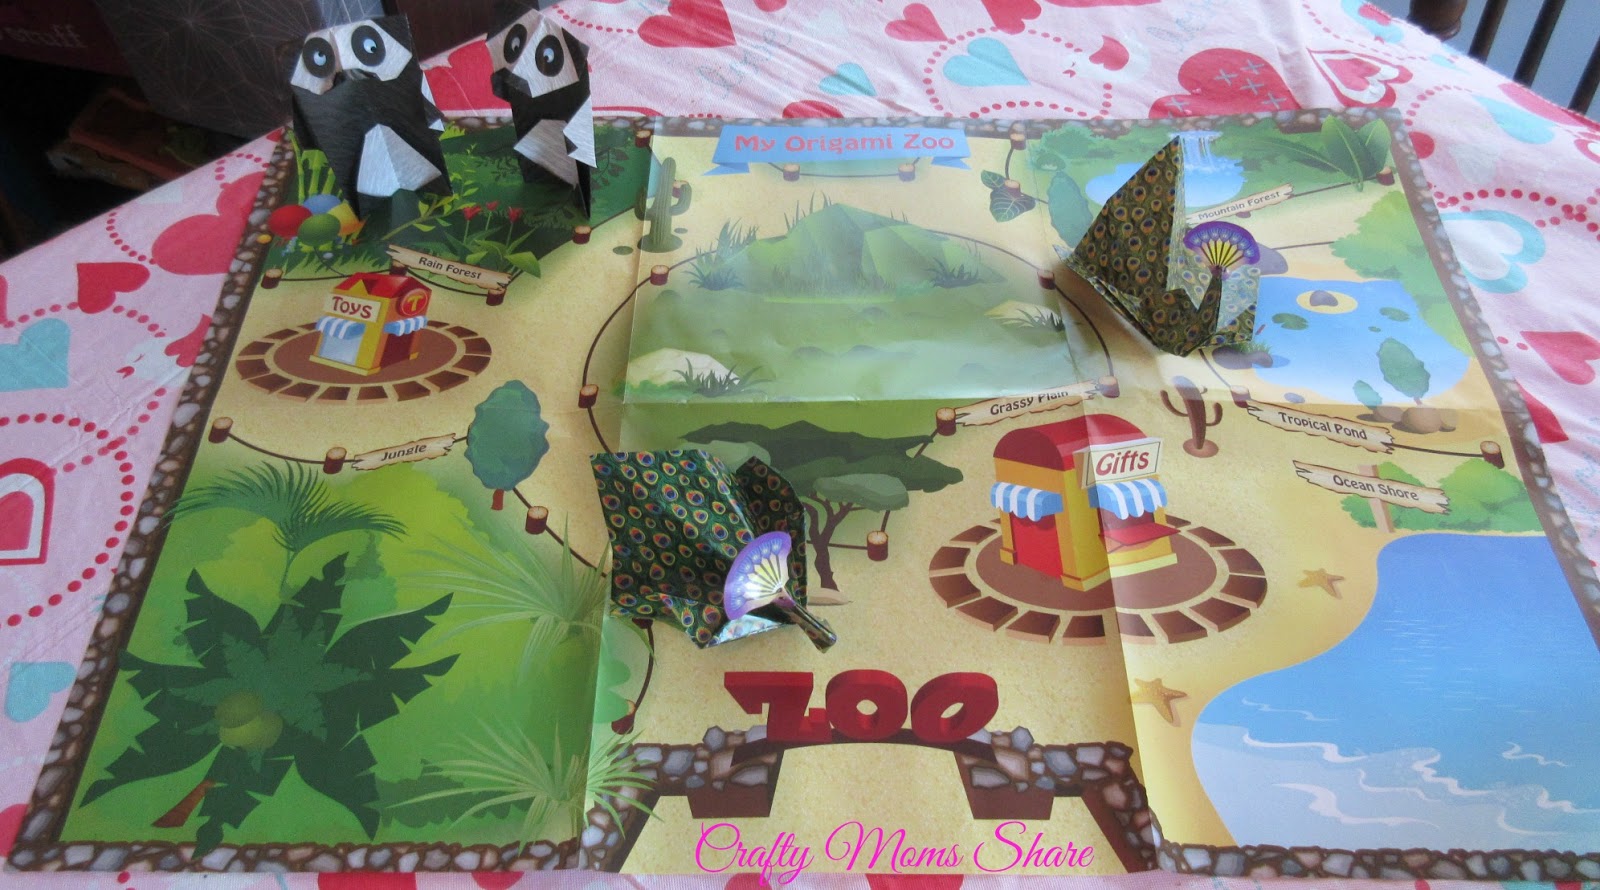 Kids DIY Kit: Origami Zoo Animals - Awesome Brooklyn